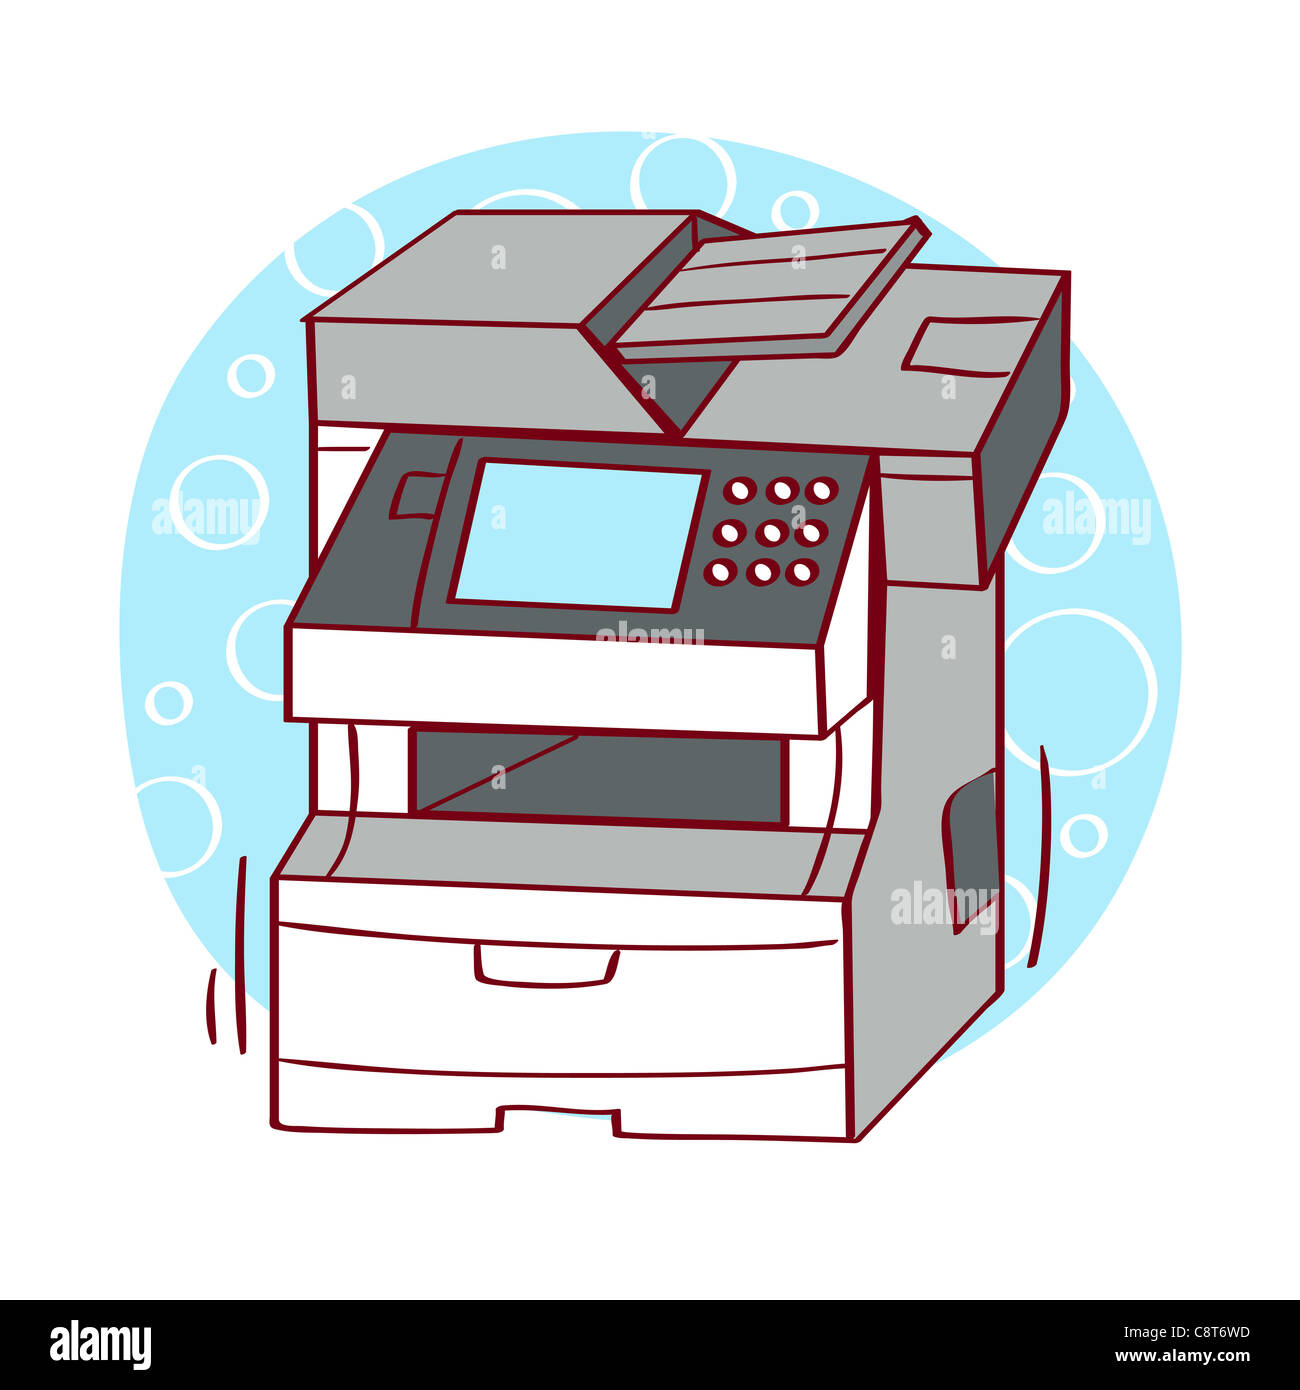 Illustration of Xerox machine Stock Photo - Alamy